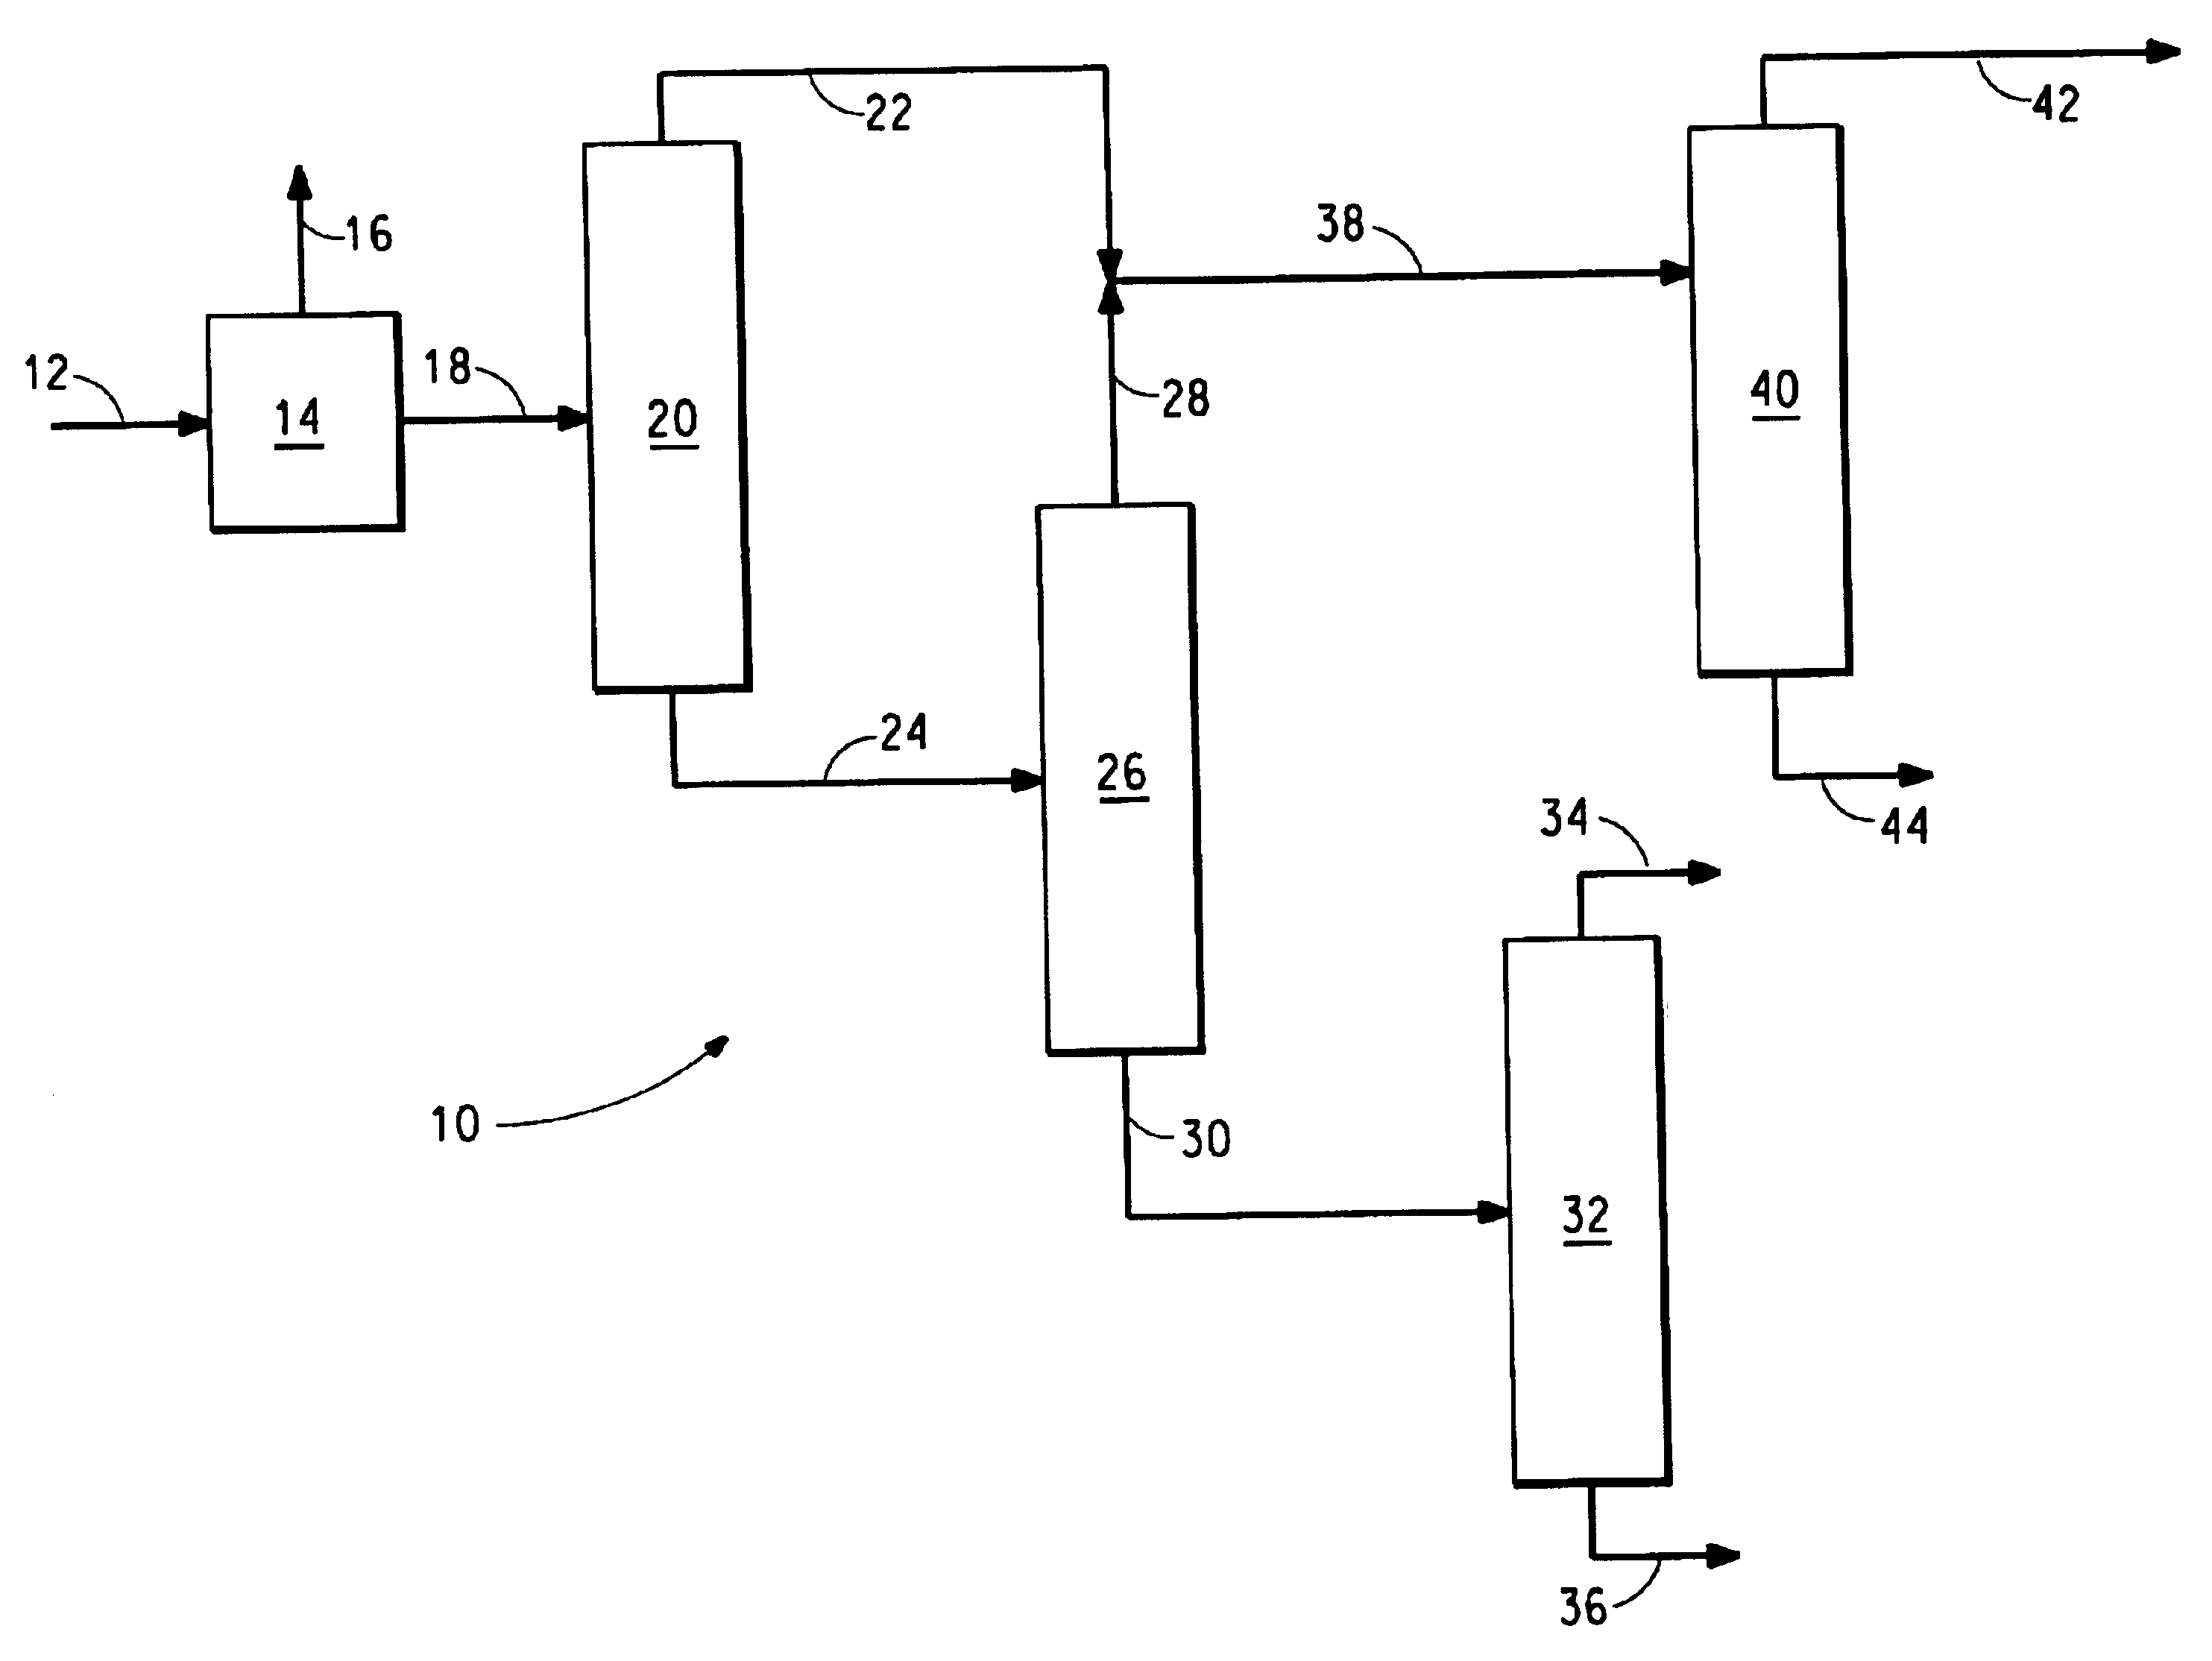 Distillative method for separating hexamethylenediamine from a mixture comprising hexamethylenediamine, 6-aminocapronitrile and tetrahydroazepine